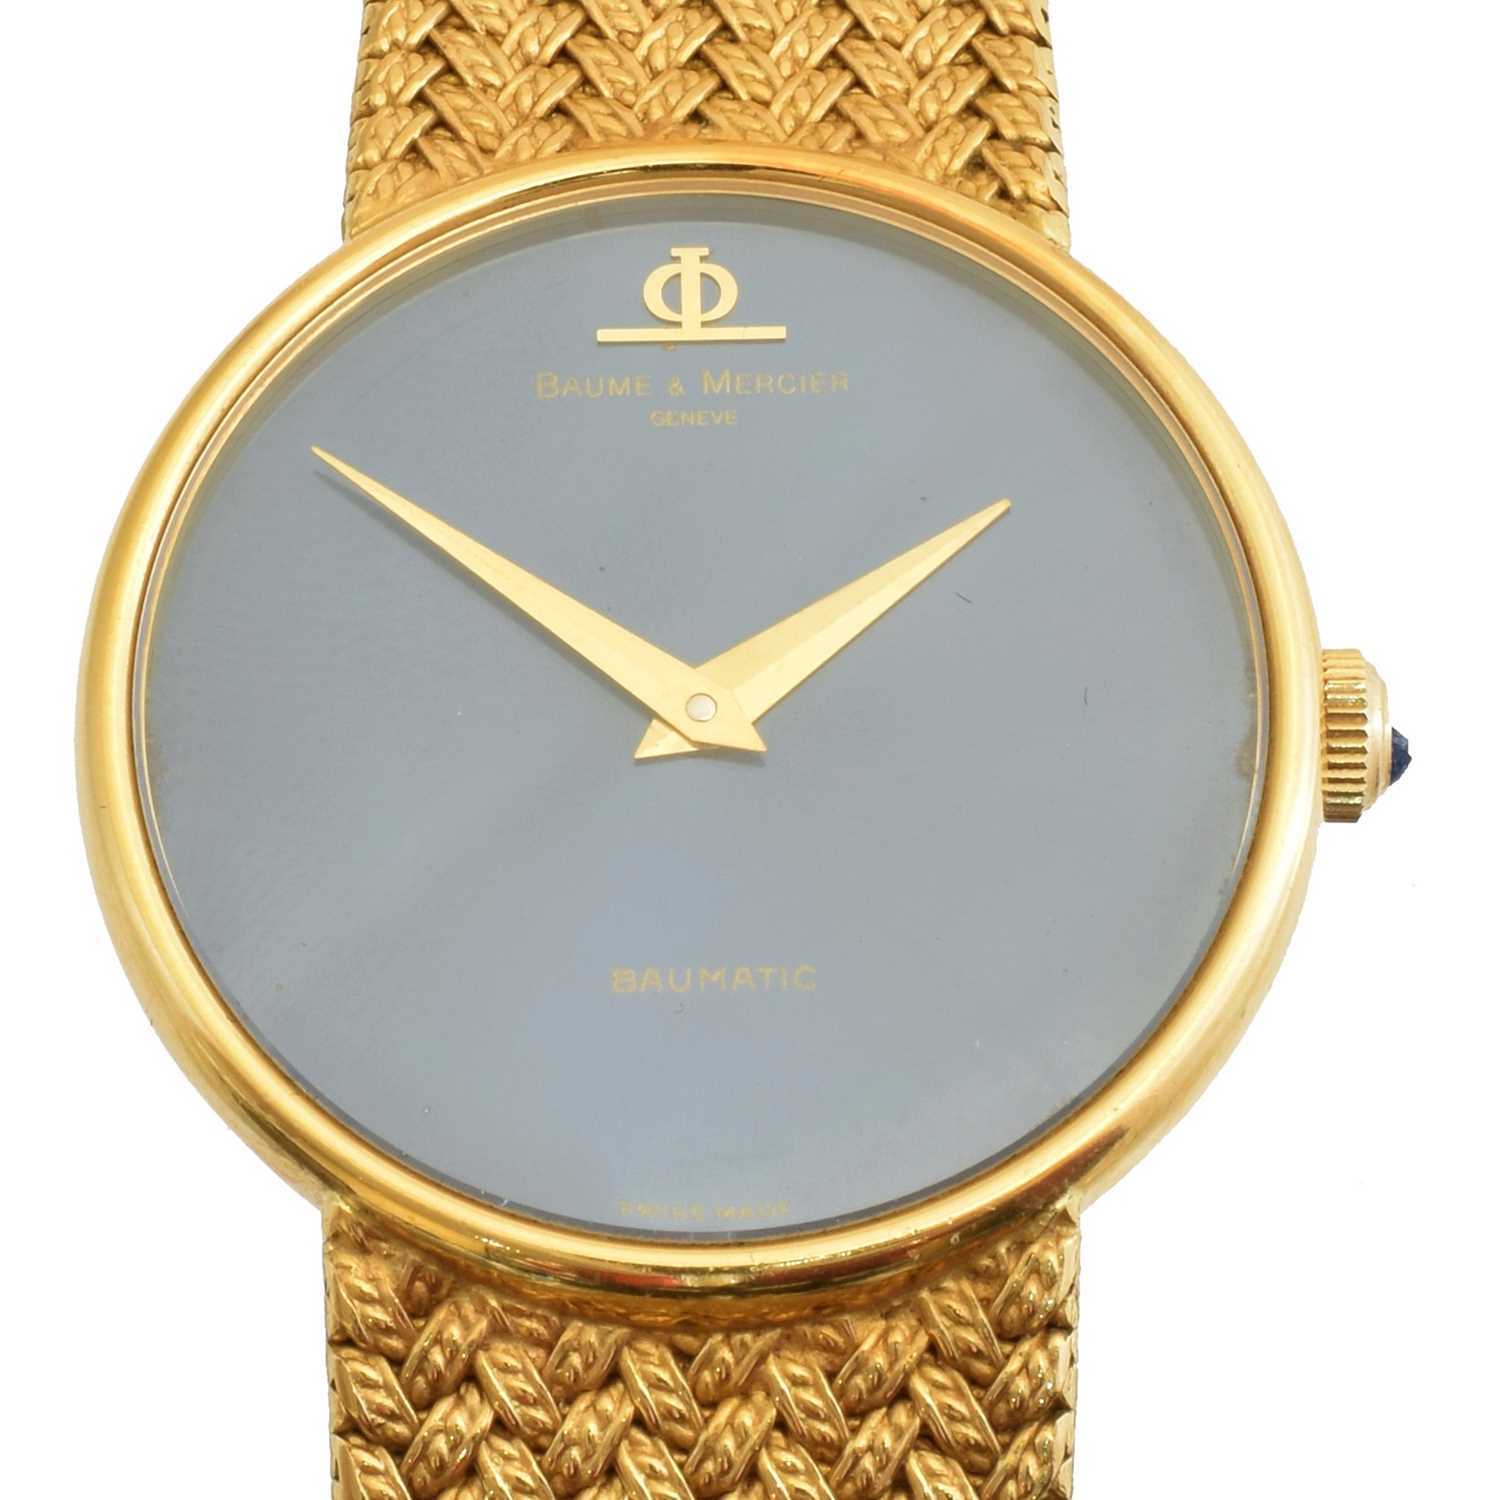 258 - An 18ct gold Baume & Mercier Baumatic wristwatch, 